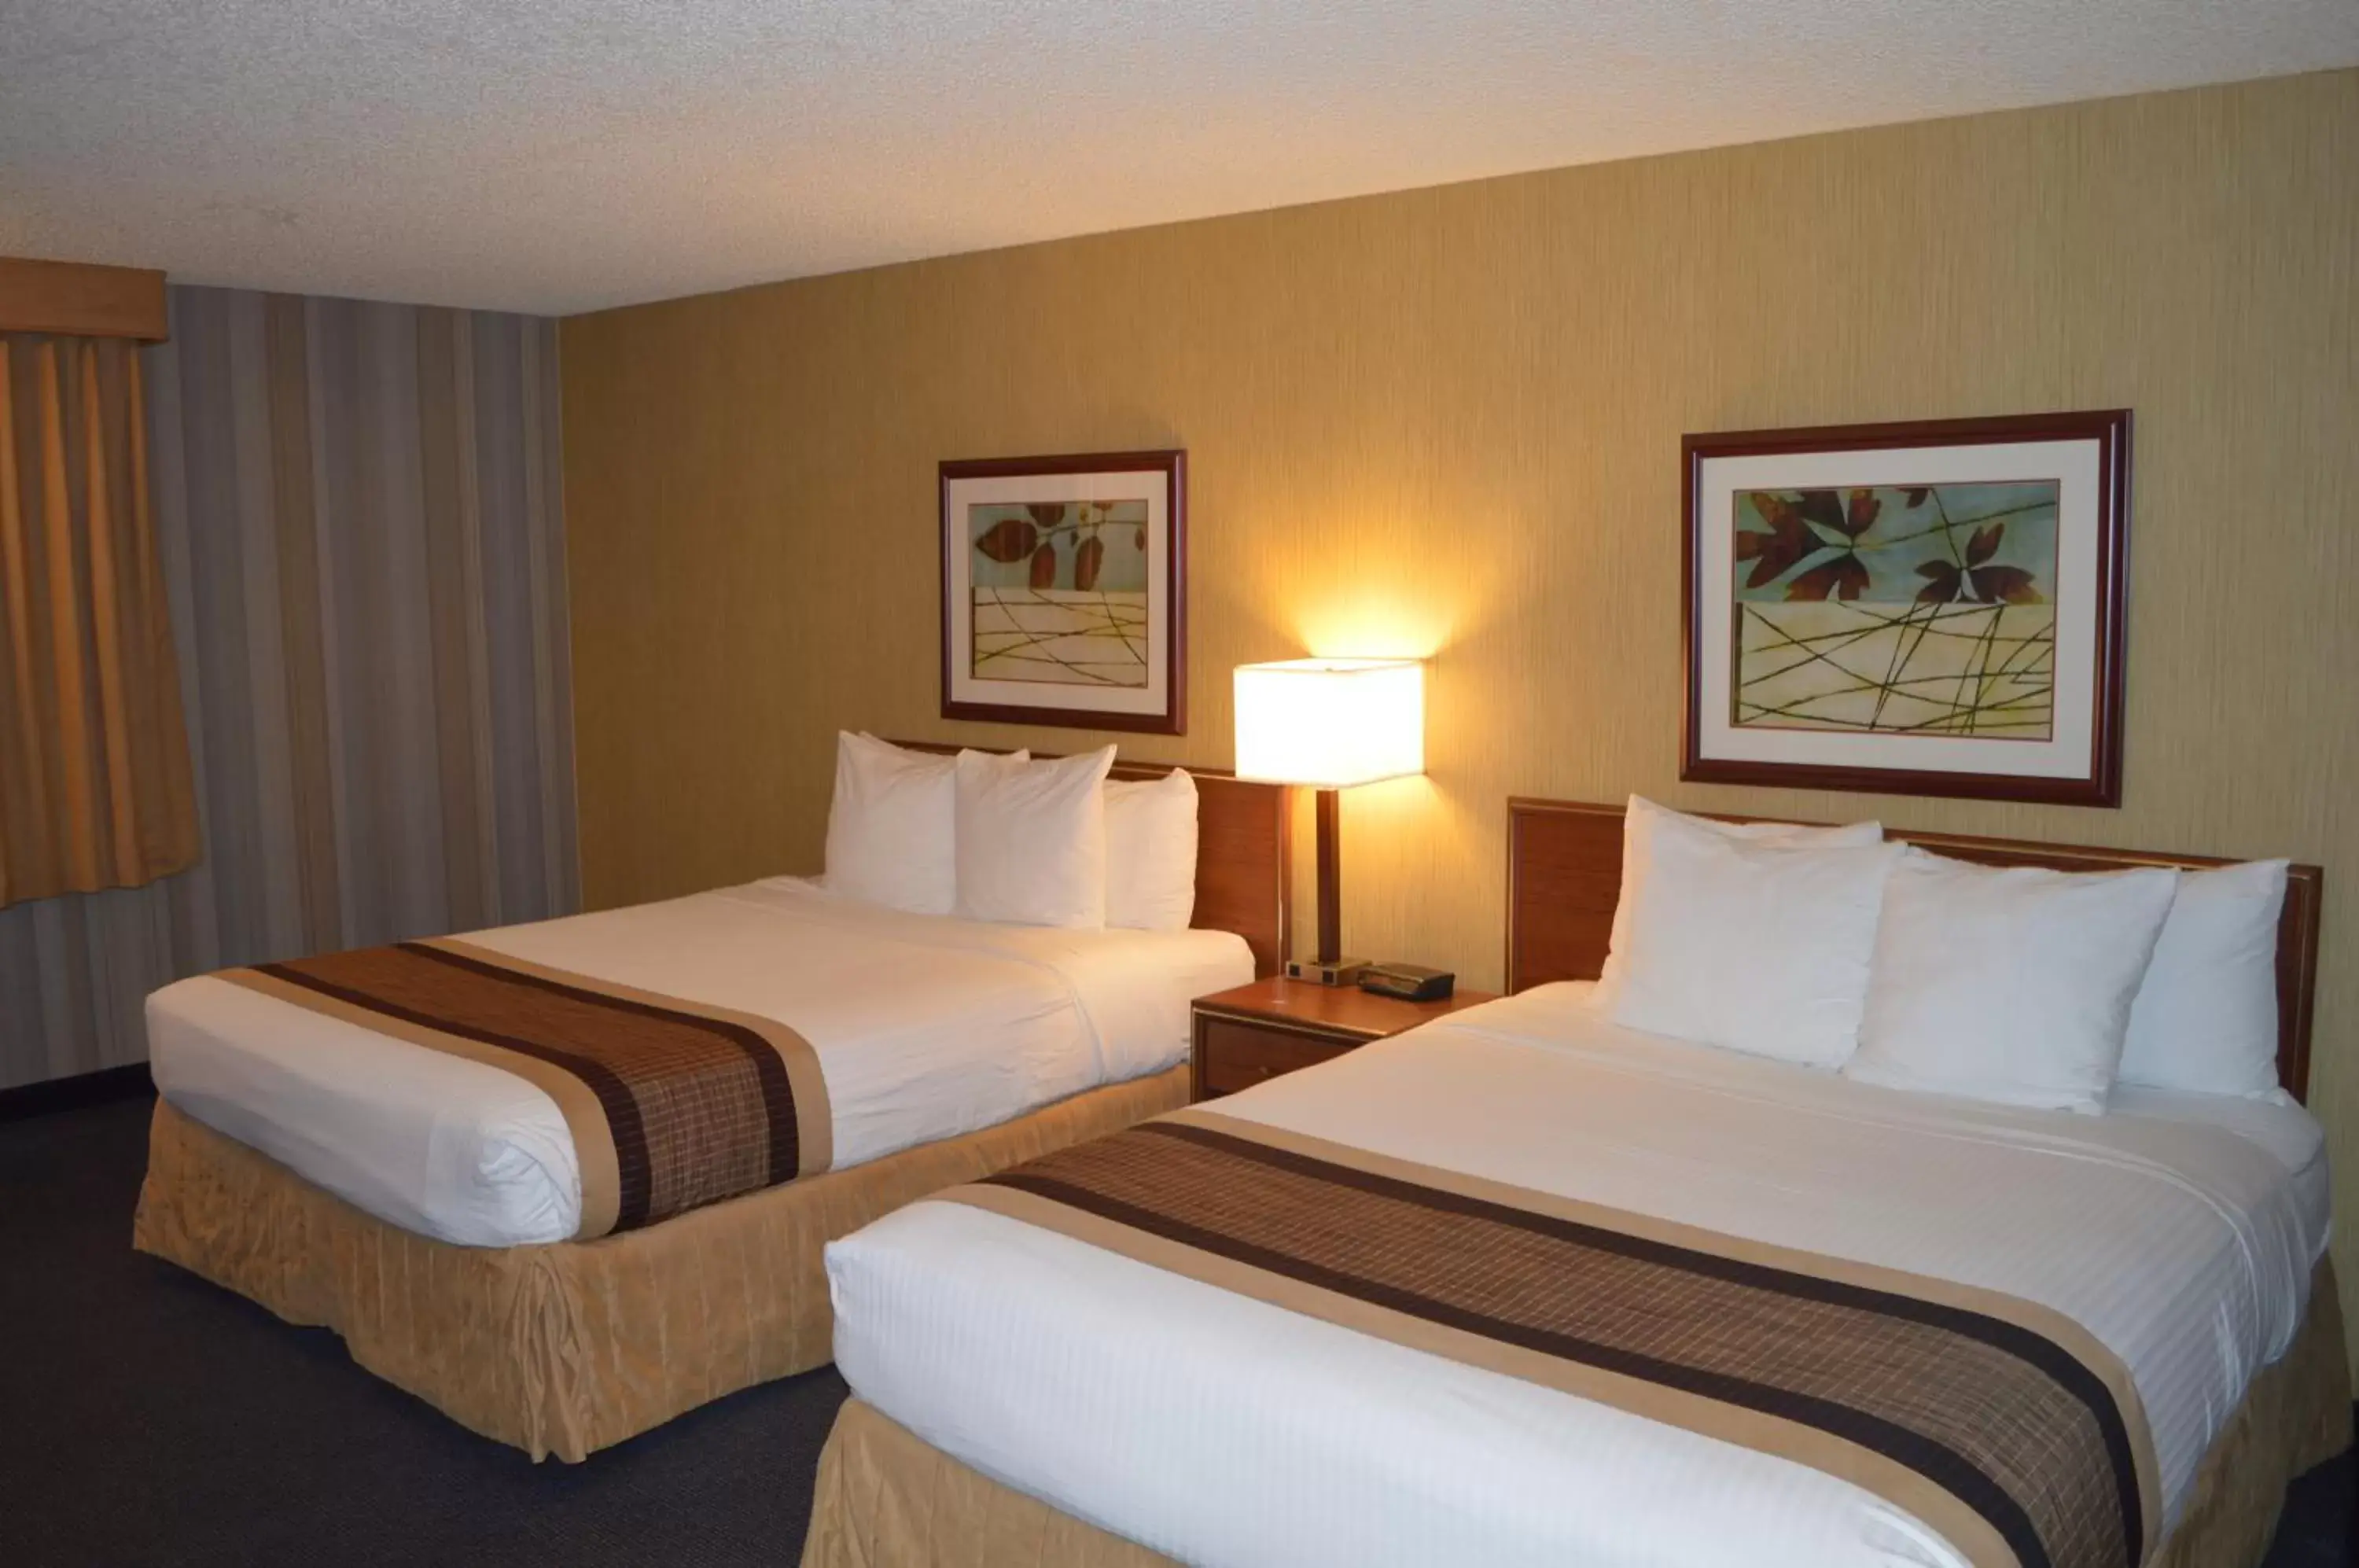 Bed, Room Photo in Best Western Cascadia Inn